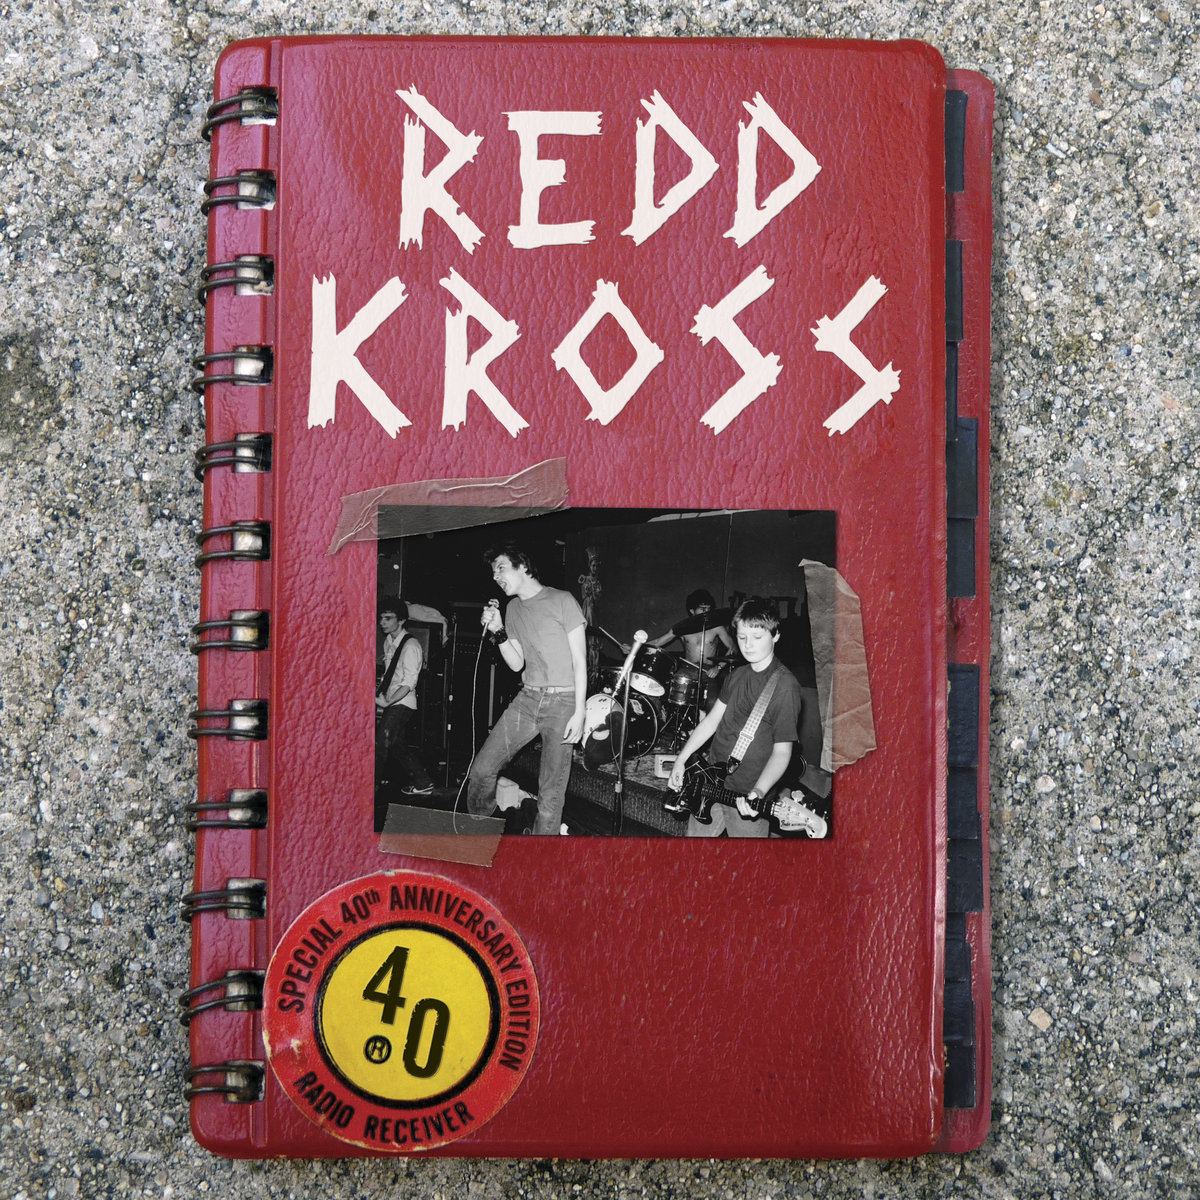 Redd Kross "Red Cross" EP